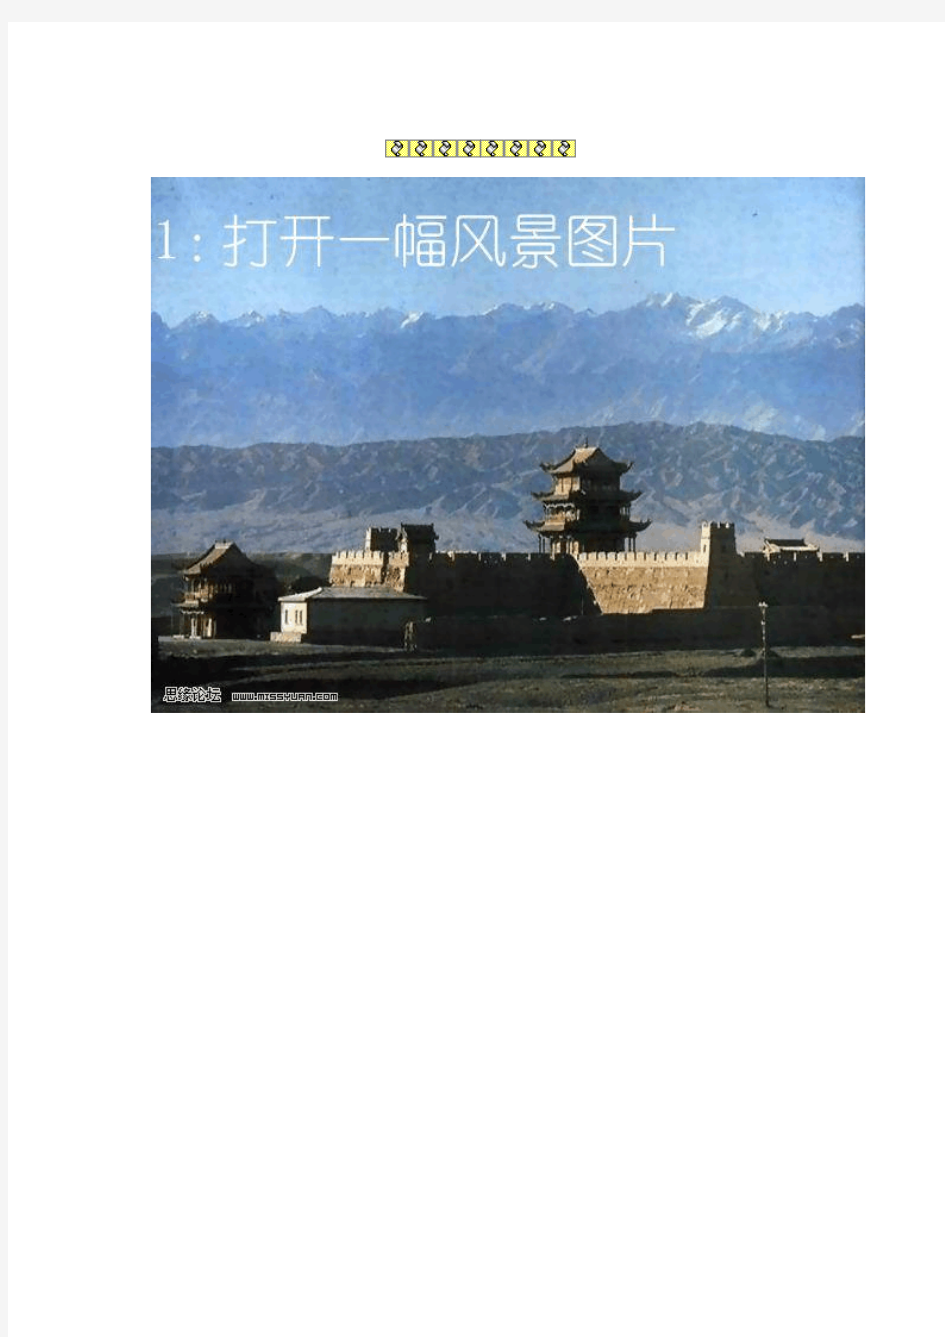 PhotoShop把照片处理为中国古典风格效果